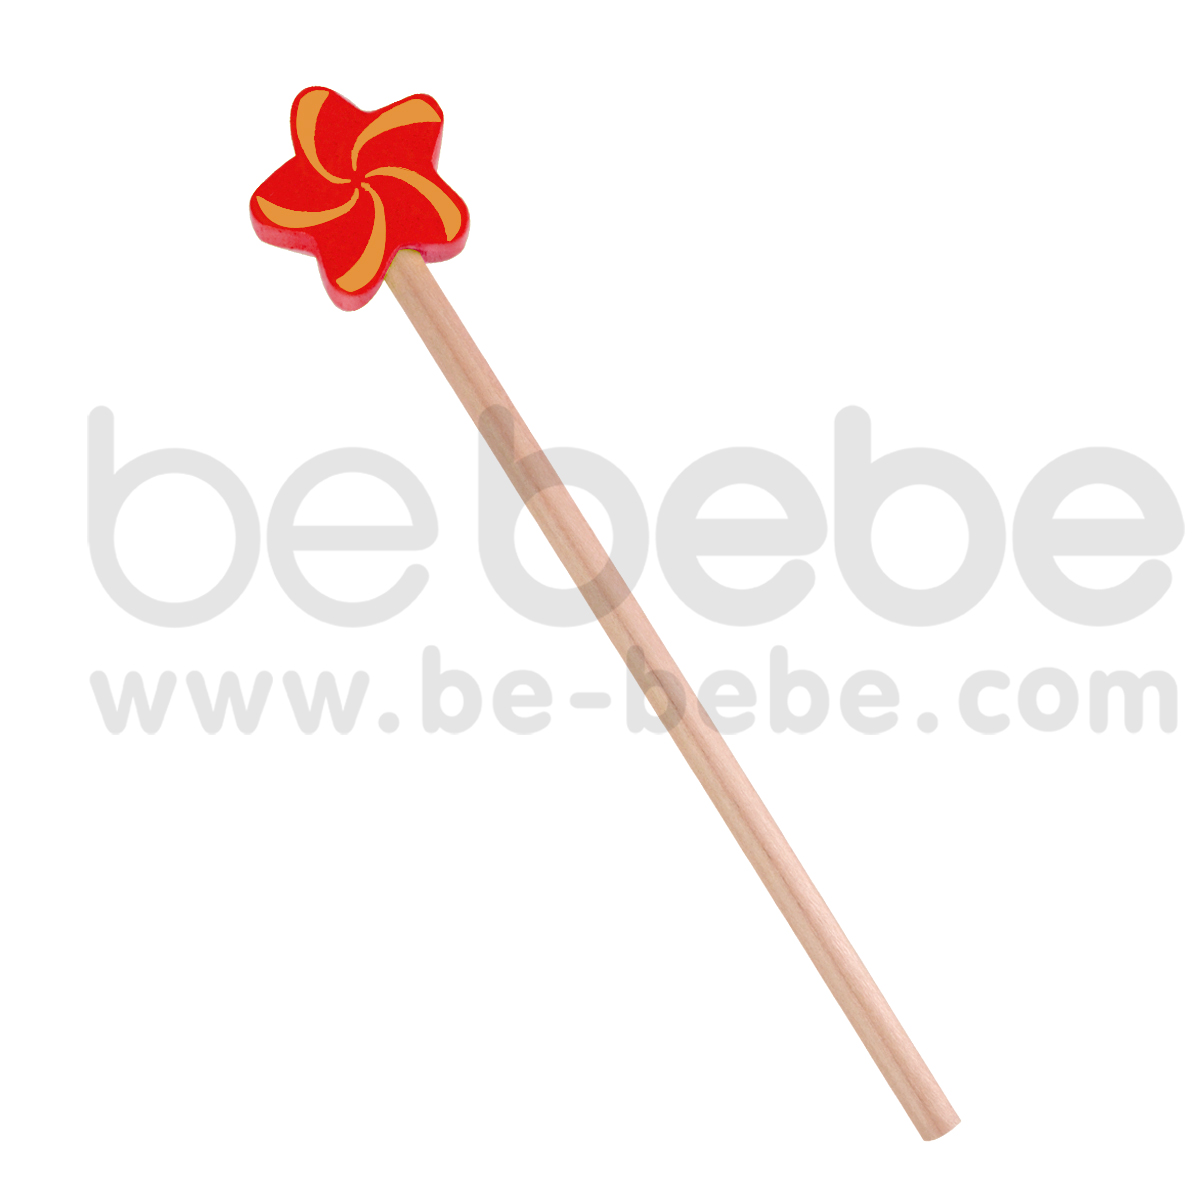 bebebe : ดินสอS ดาวกังหัน/แดง